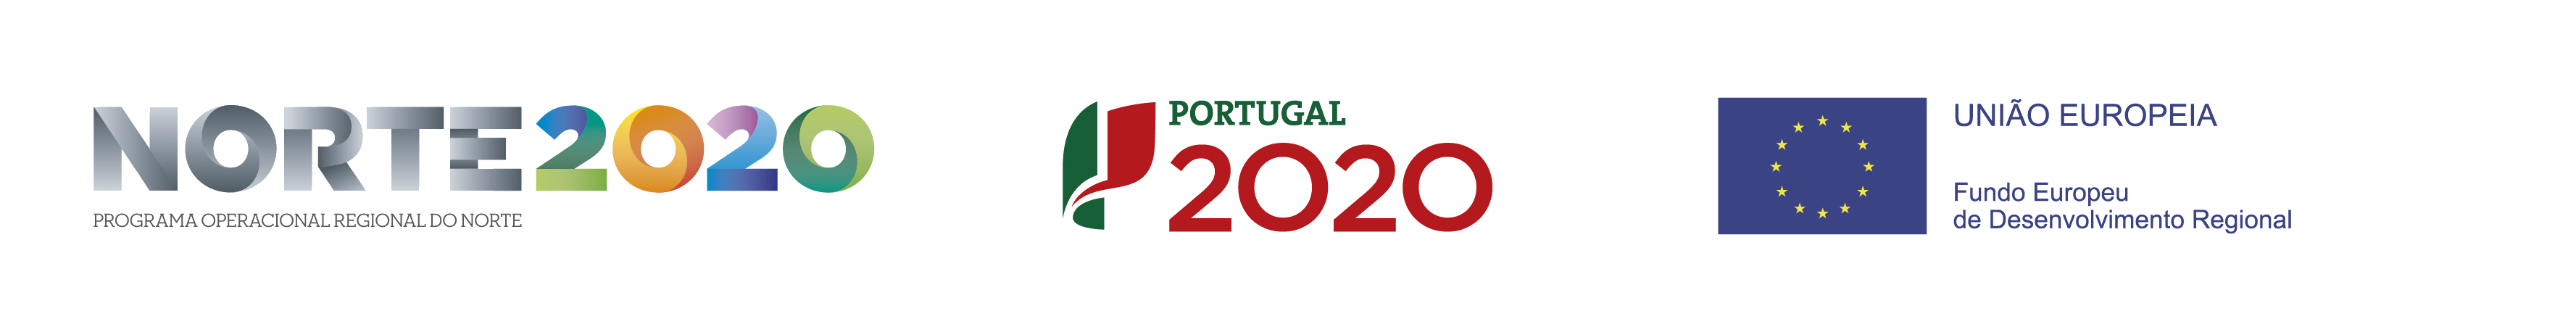 Norte2020-Portugal2020-UE